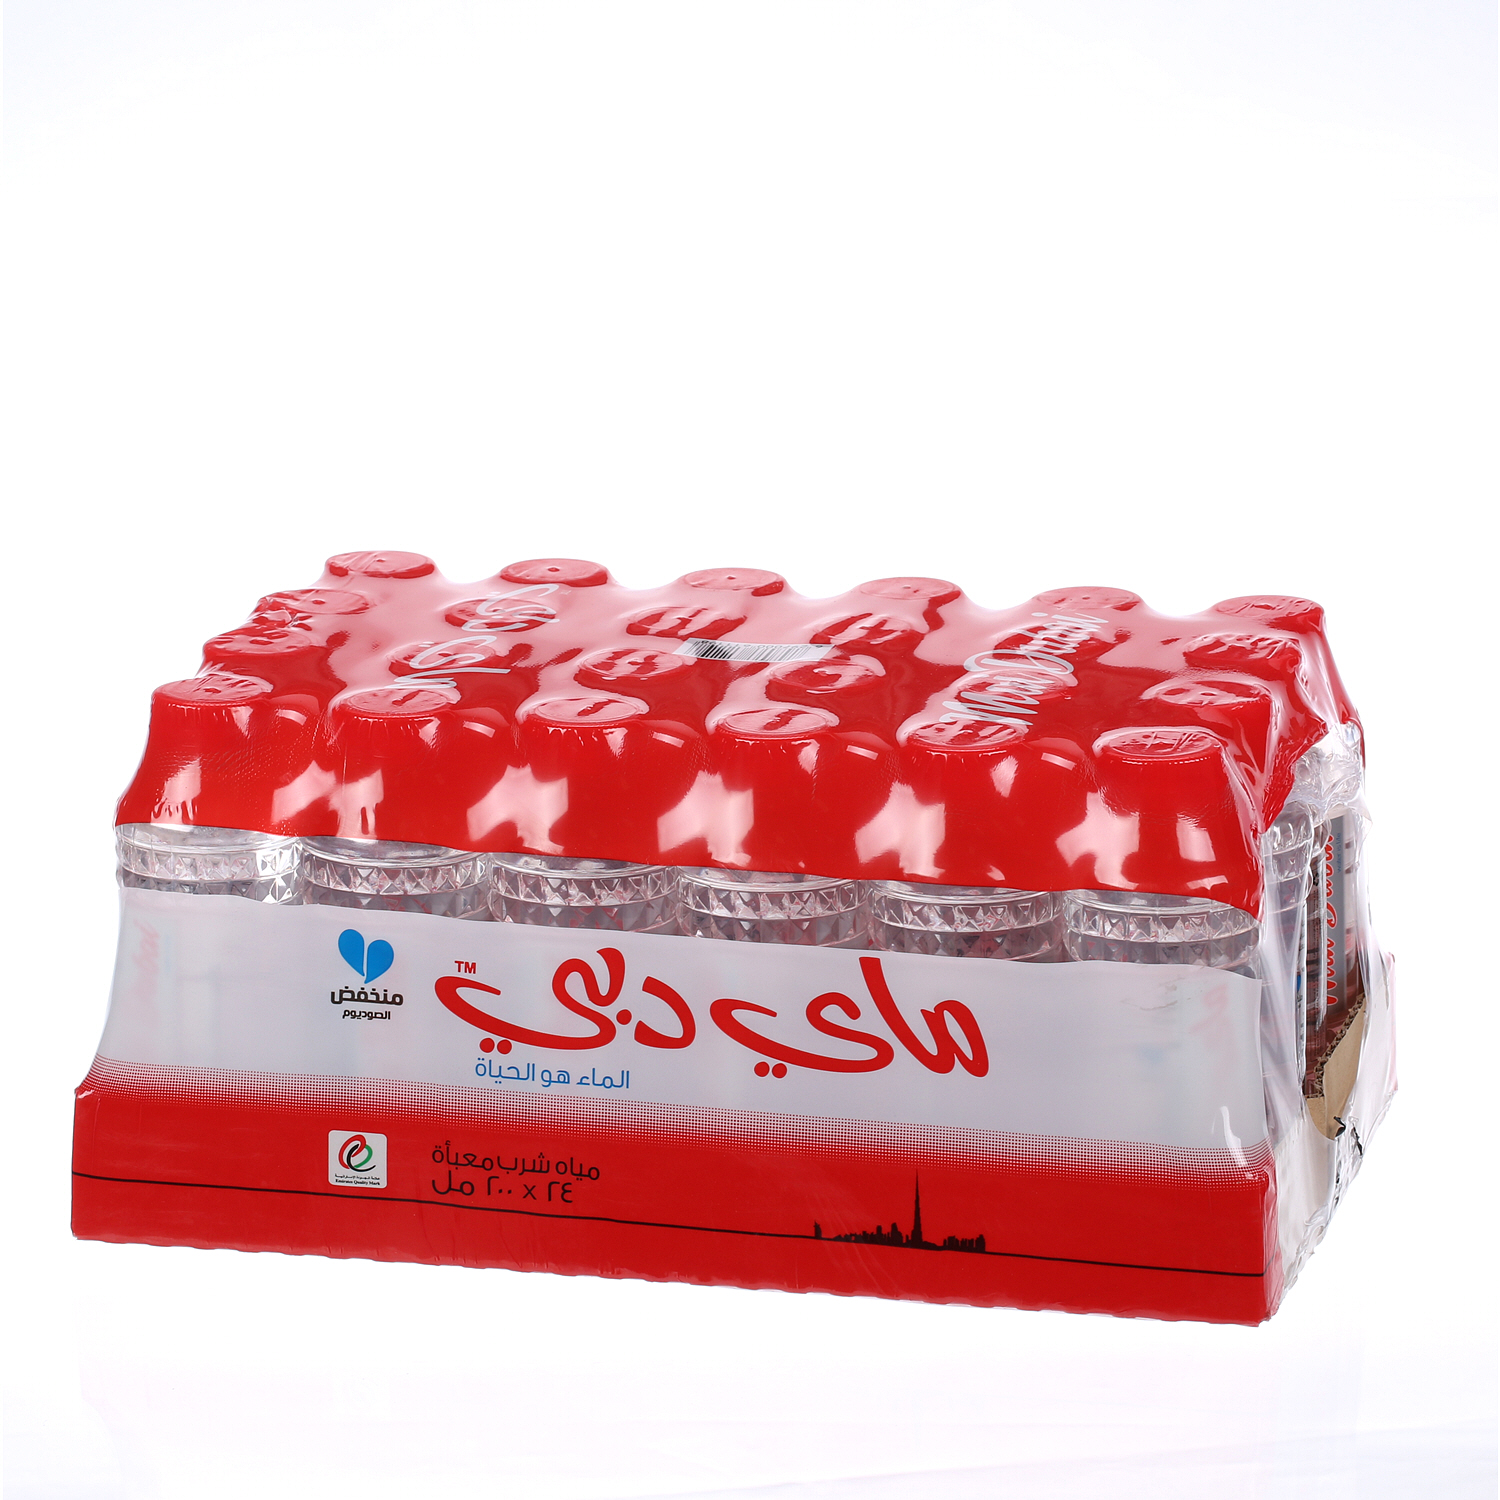 Mai Dubai Drinking Water Bottle 200 ml × 24 Pack